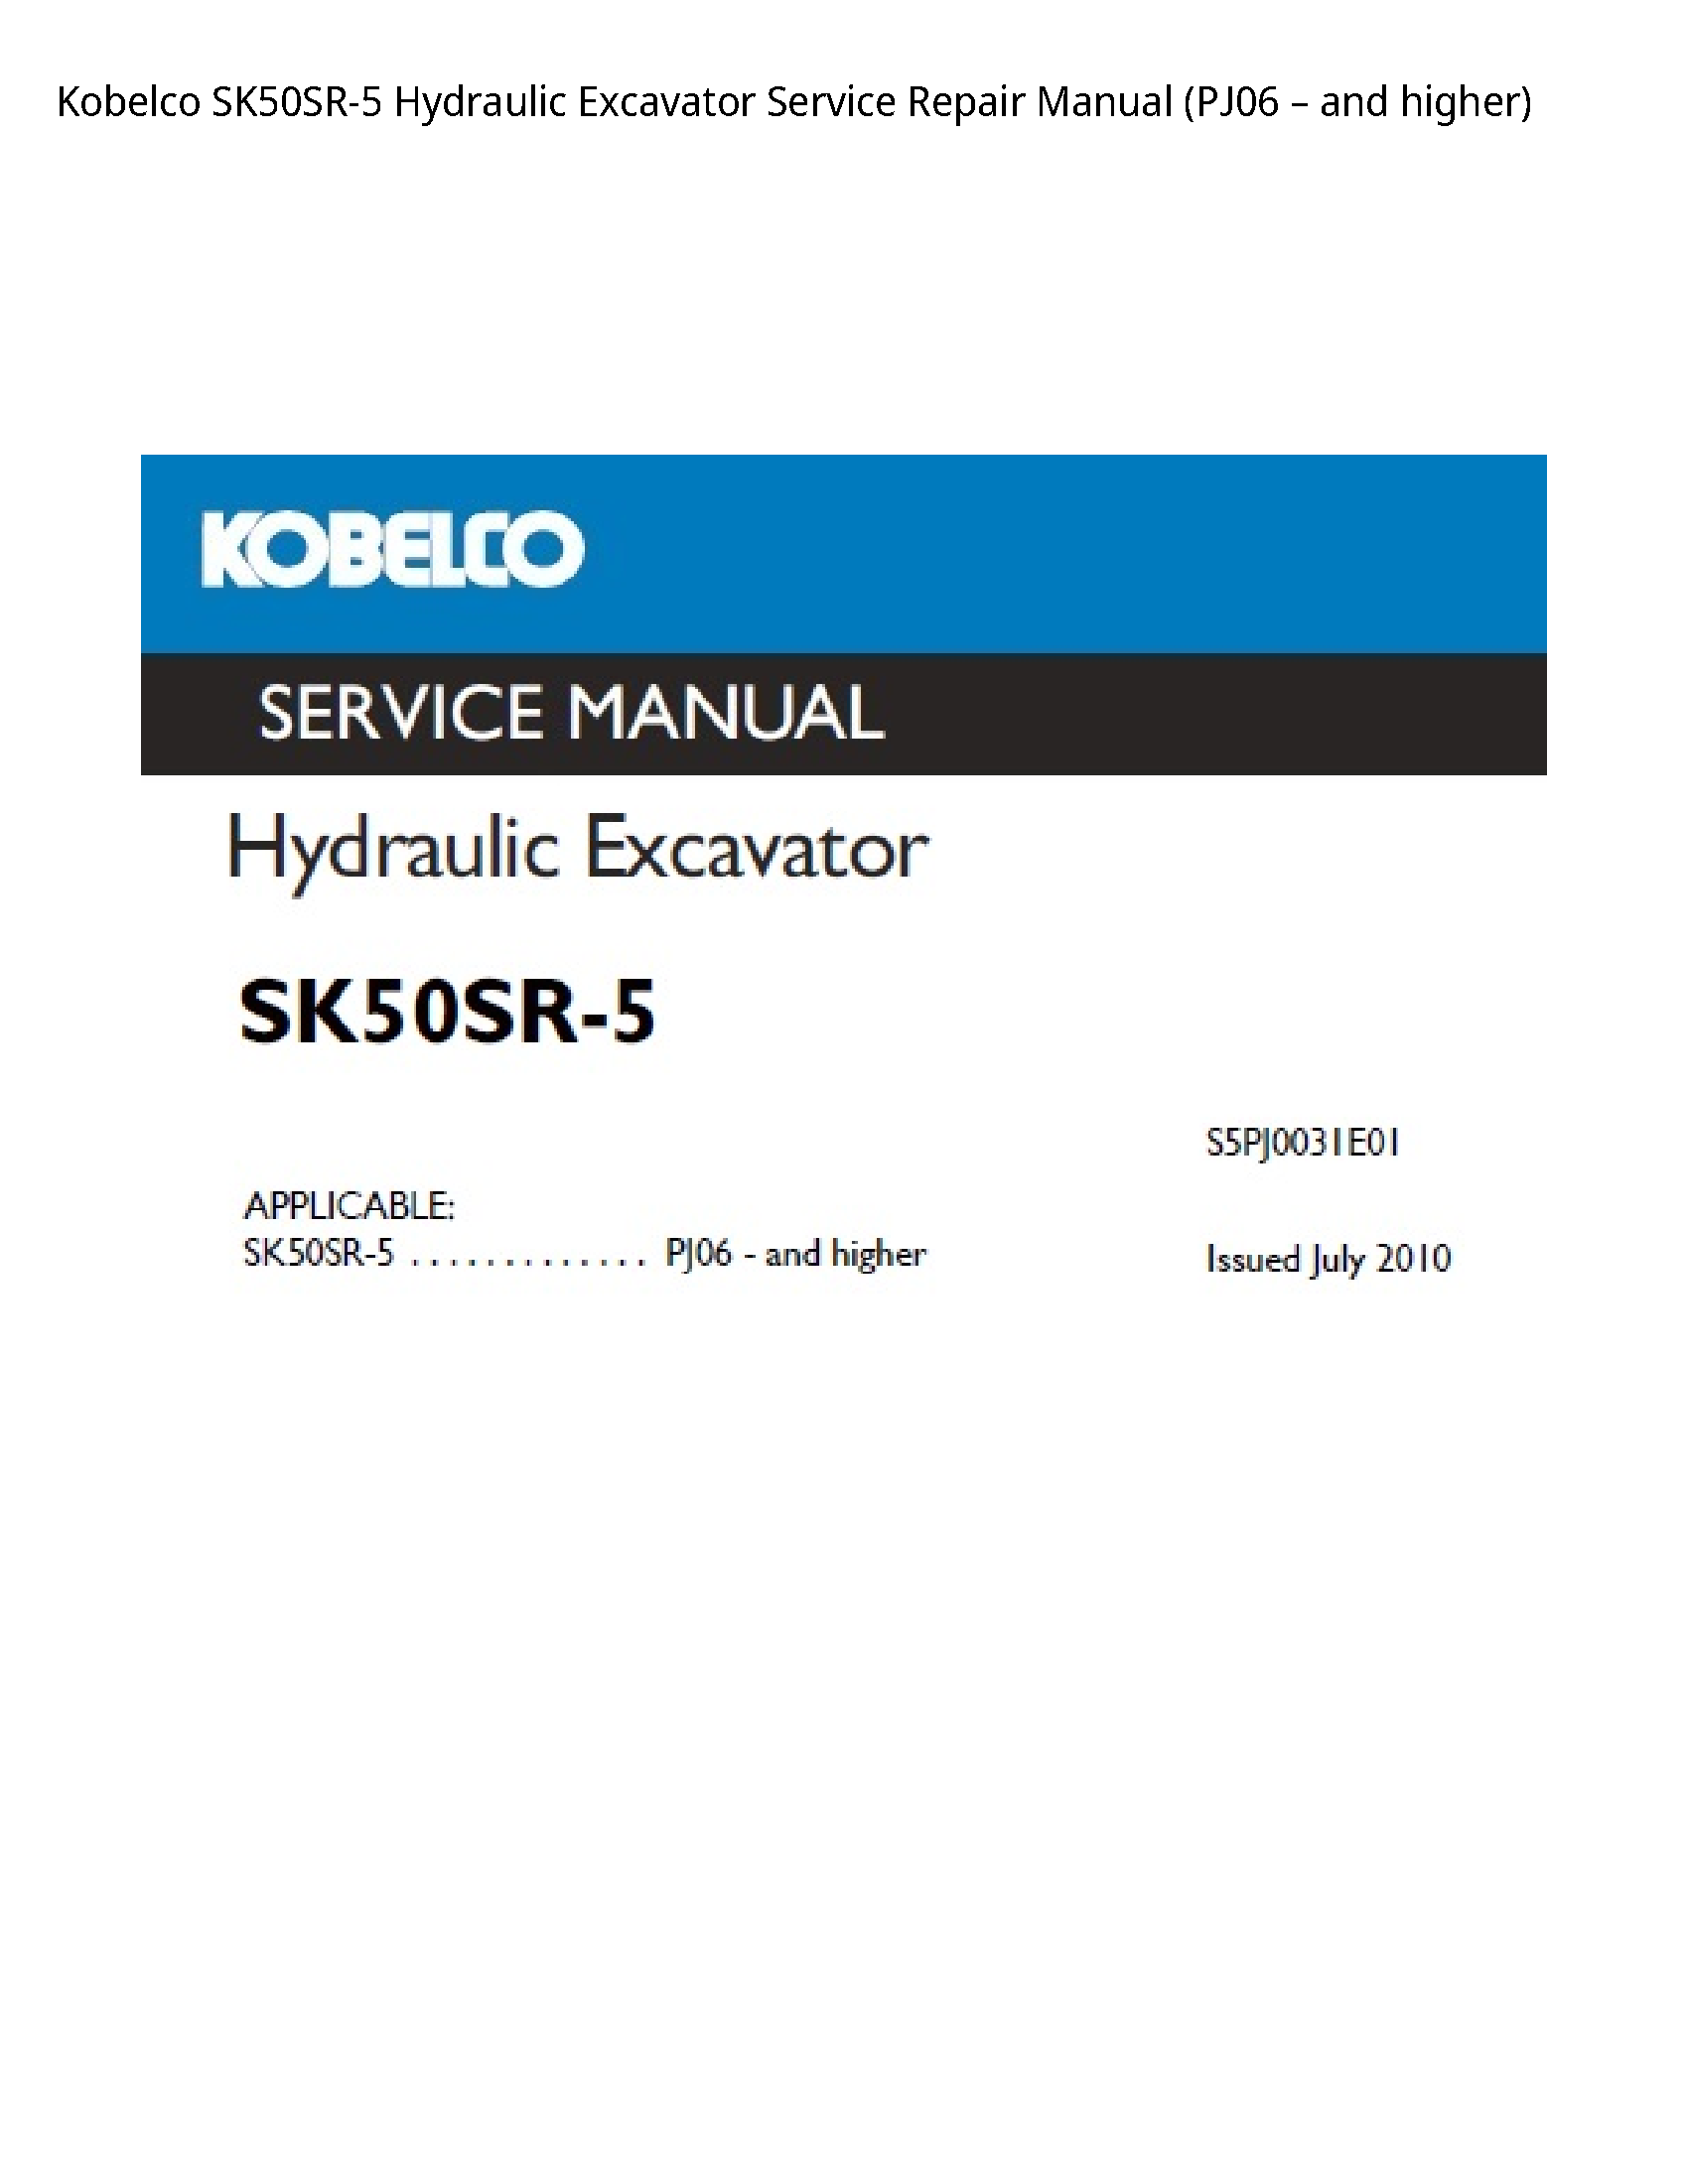 Kobelco SK50SR-5 Hydraulic Excavator manual